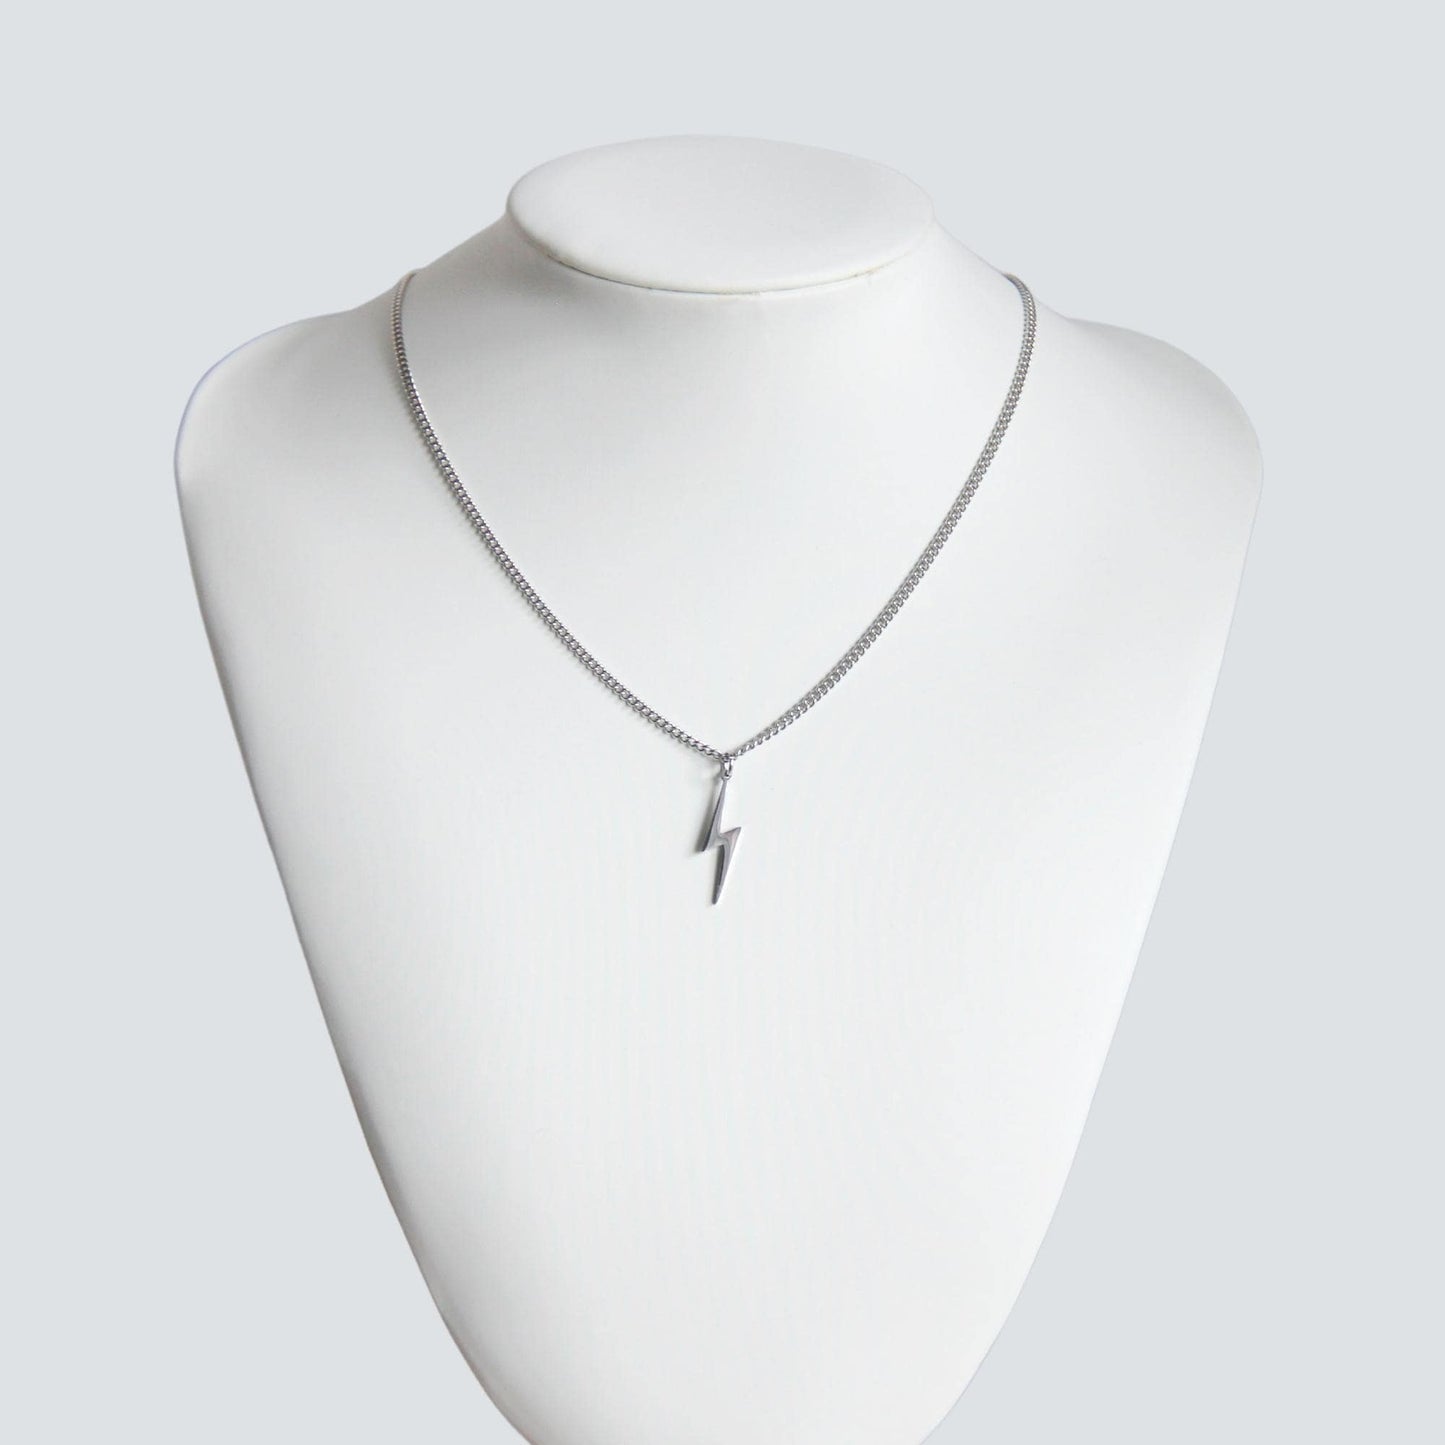 Silver Lightning Bolt Pendant Necklace For Men or Women - Necklace - Boutique Wear RENN